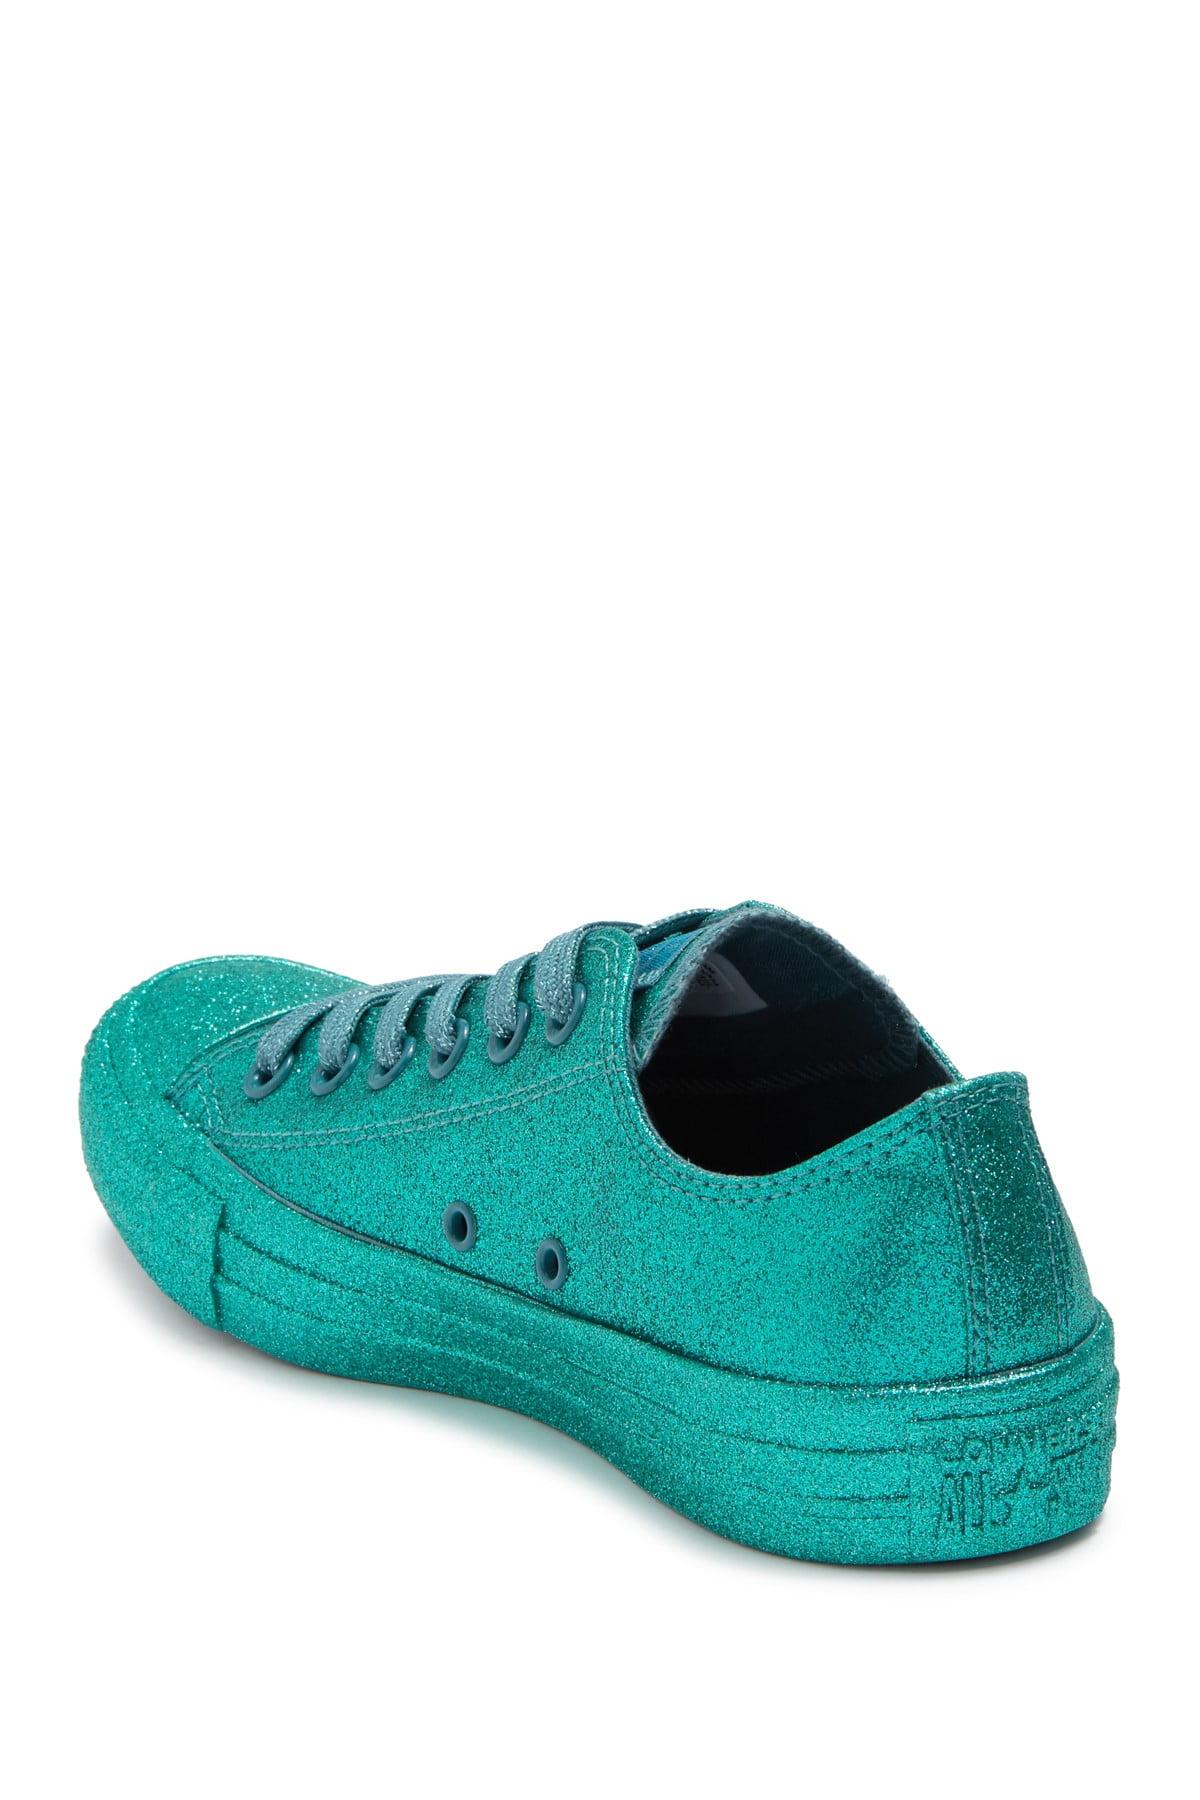 Converse Brittany Glitter Oxford Sneaker in Blue | Lyst